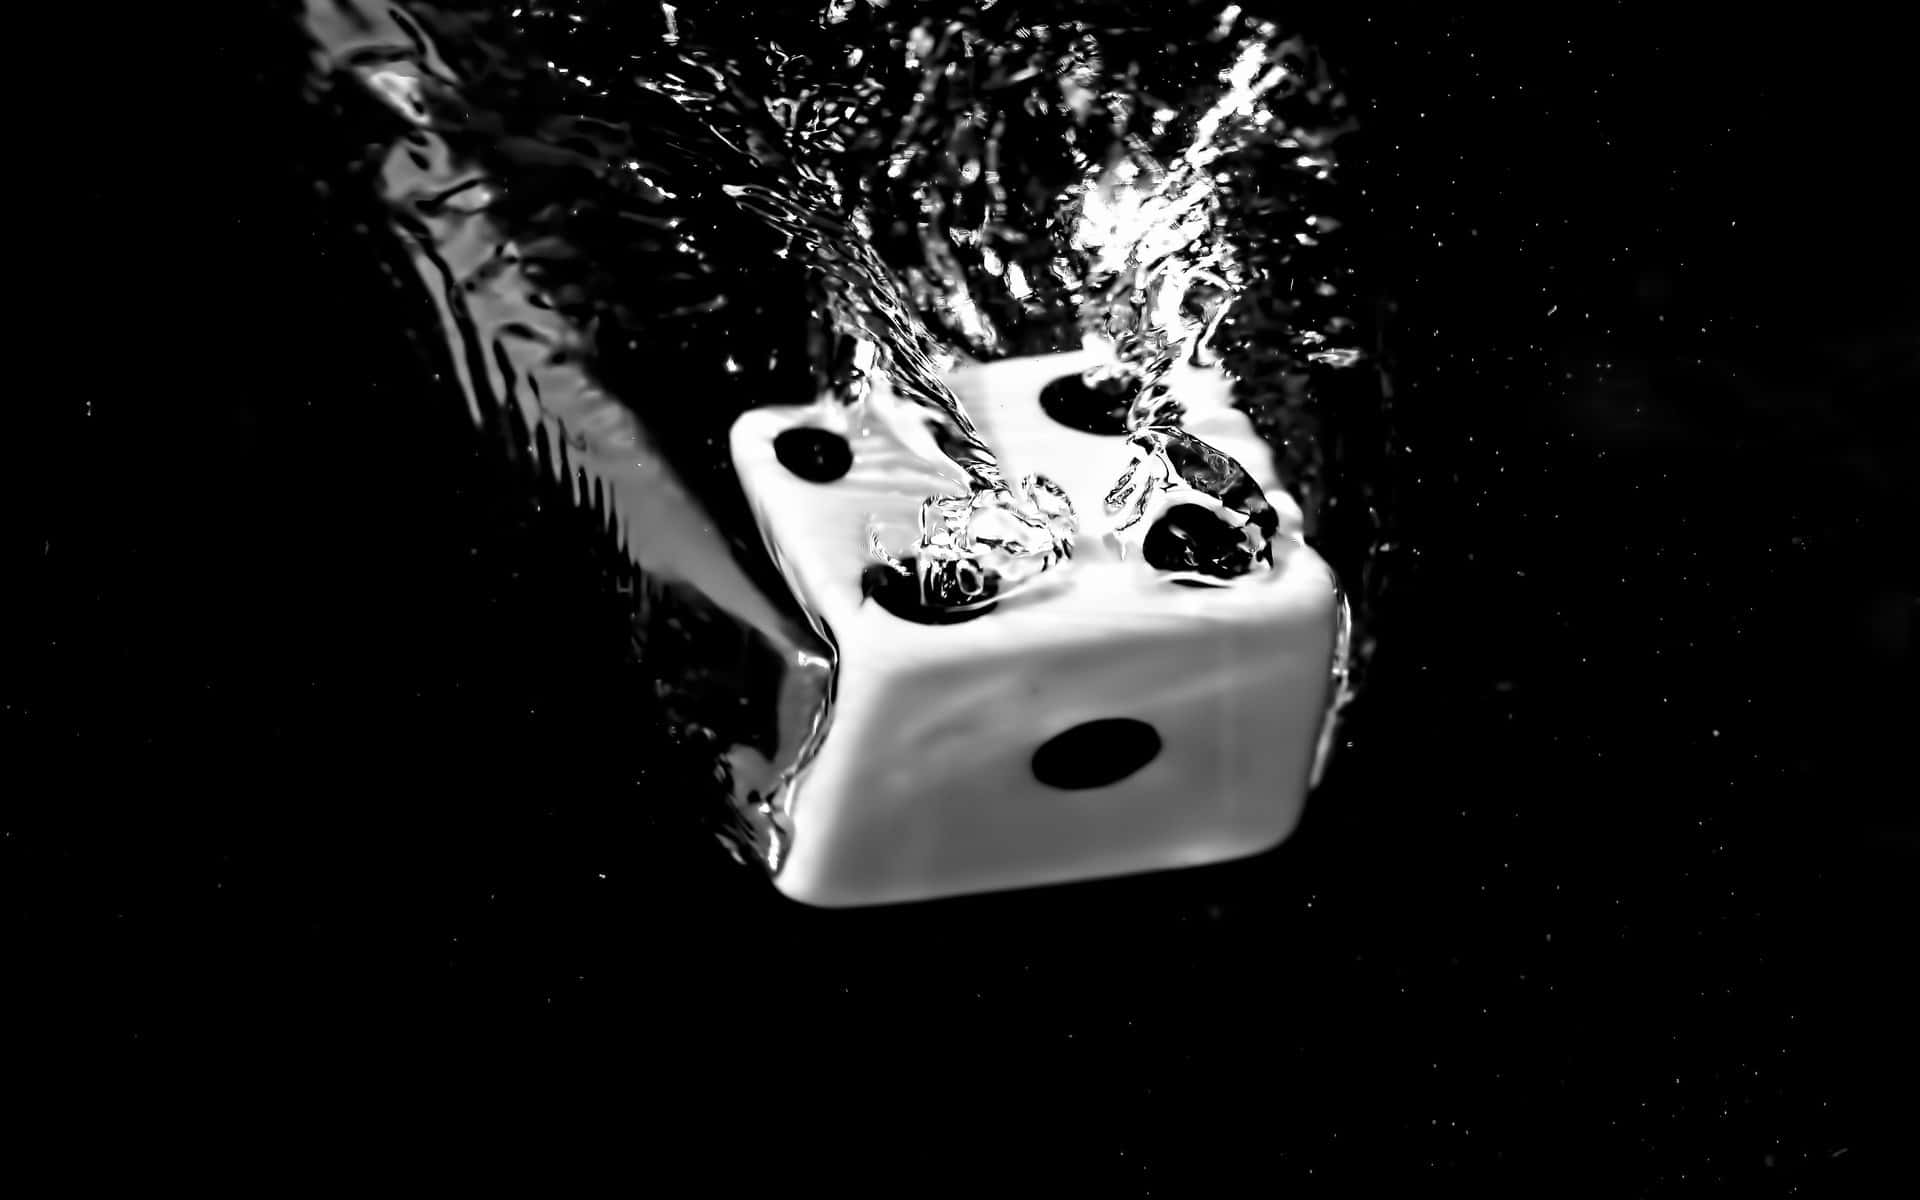 Submerged Dice Motion Capture.jpg Background